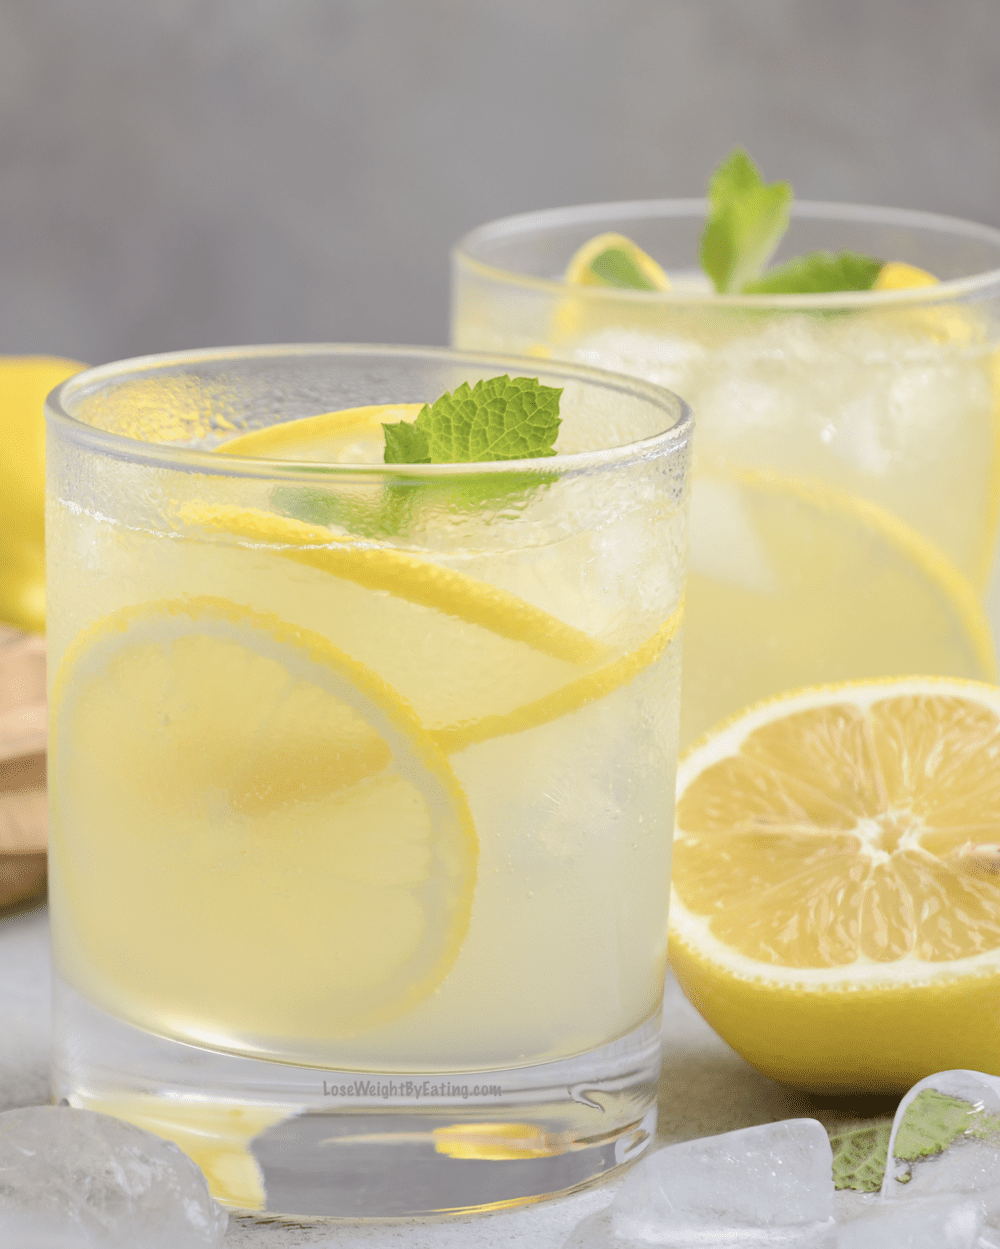 Lemon Juice and Baking Soda Drink